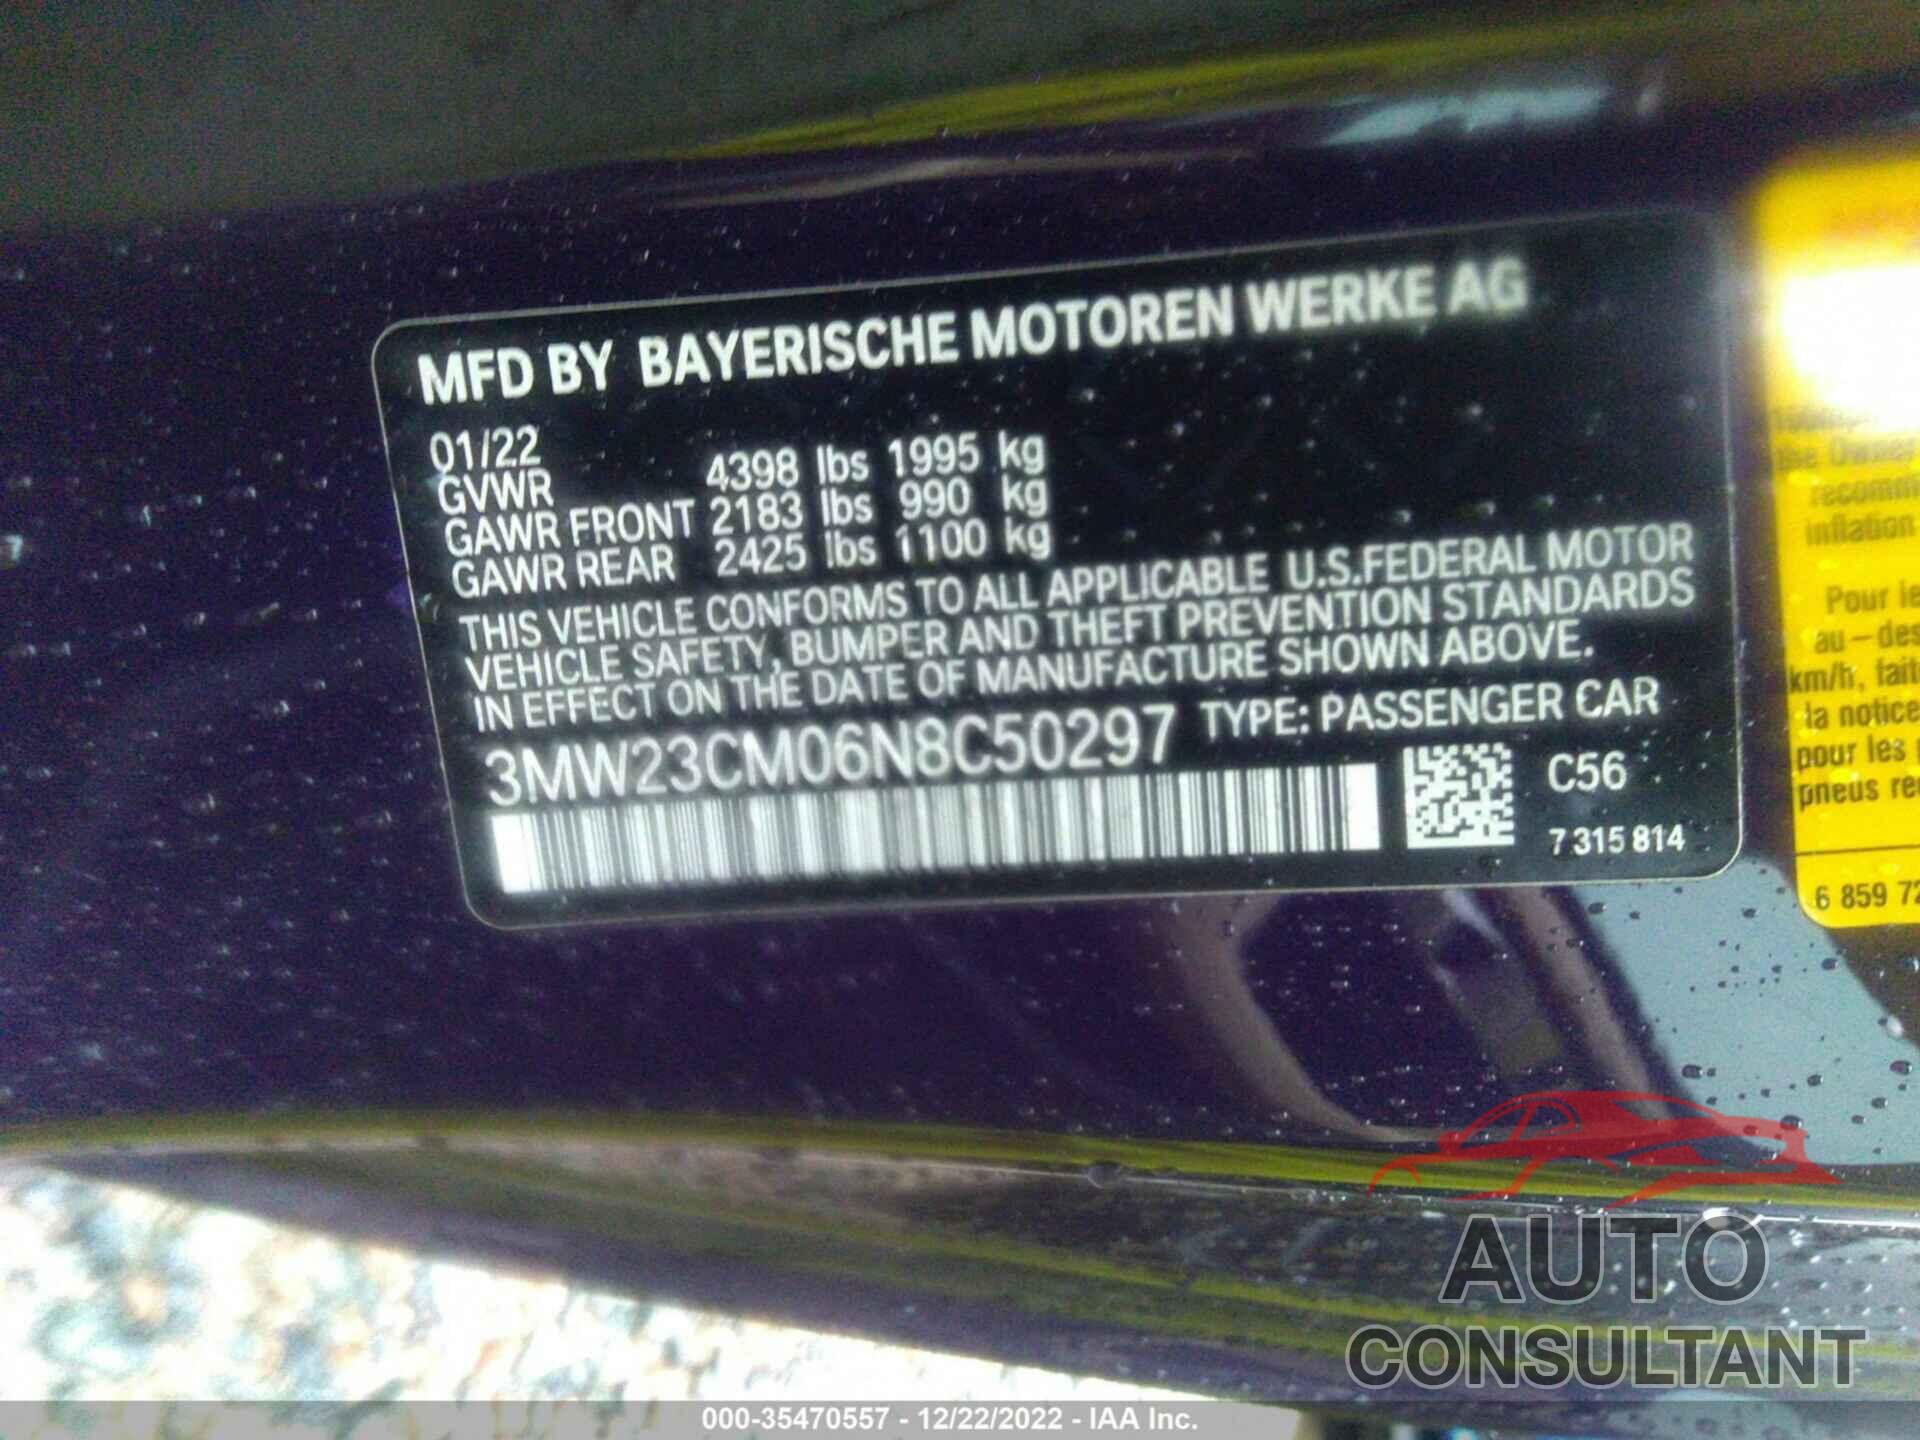 BMW 2 SERIES 2022 - 3MW23CM06N8C50297